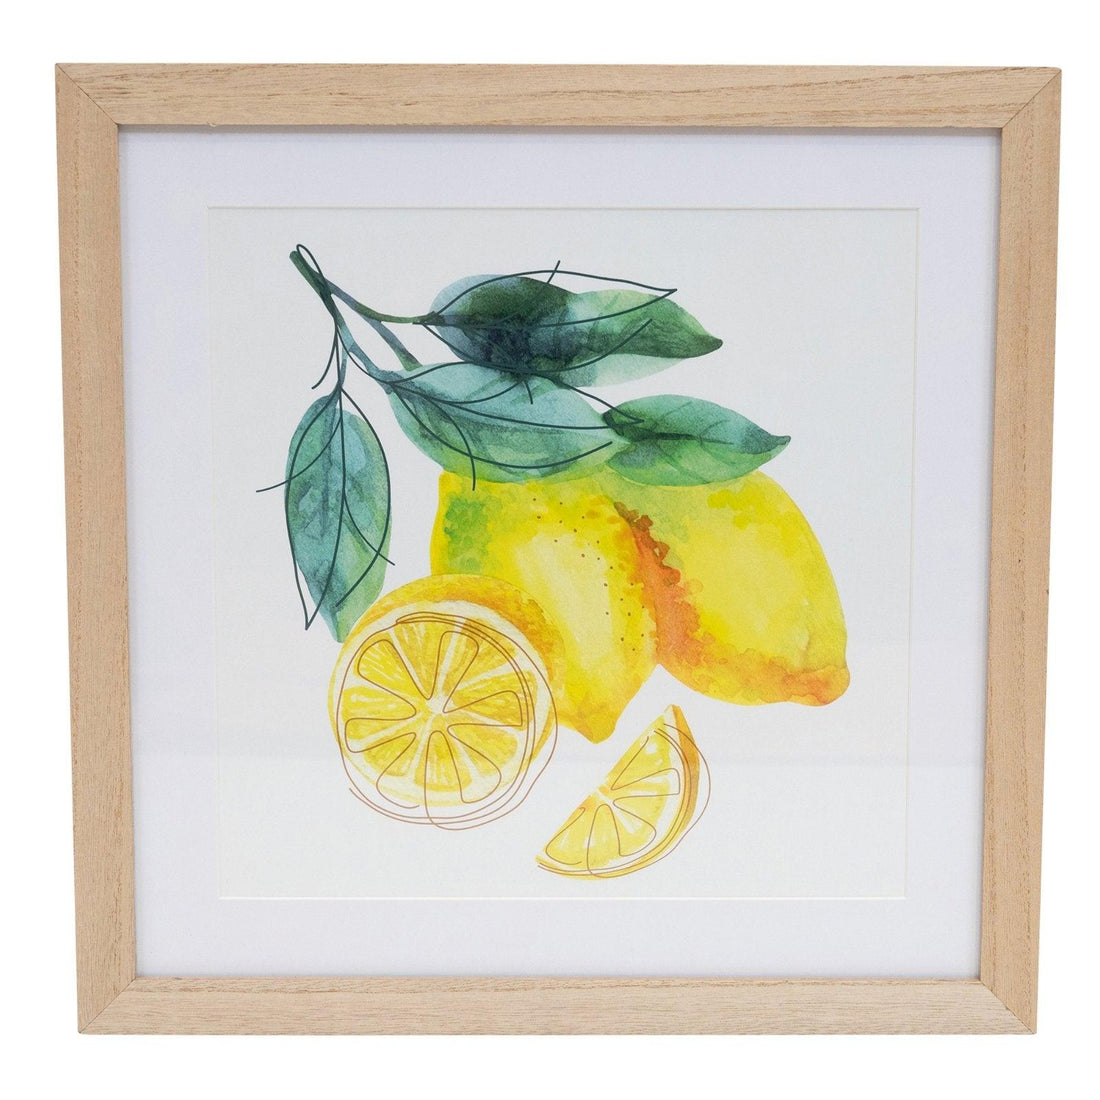 Watercolour Lemons Art In Frame - £27.99 - Pictures 